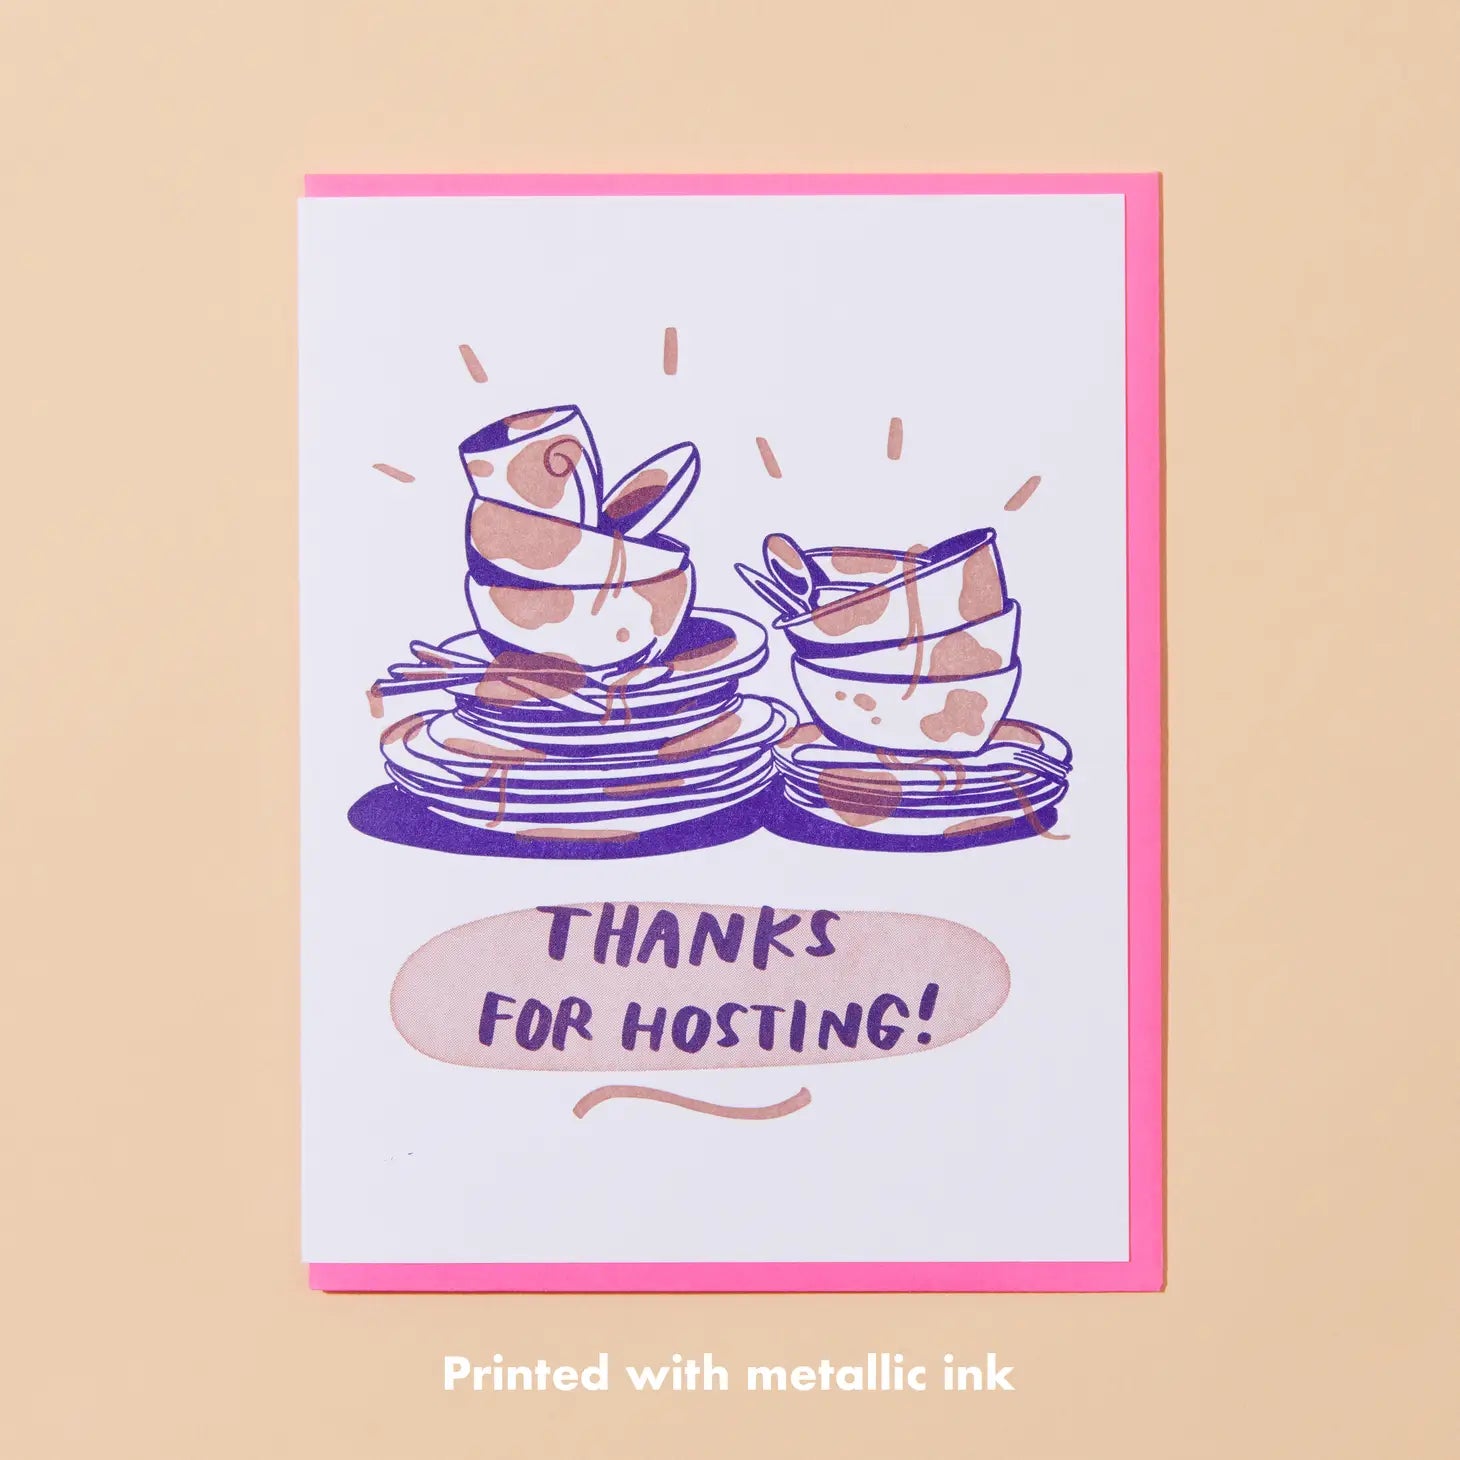 Thanks For Hosting - Greeting Card